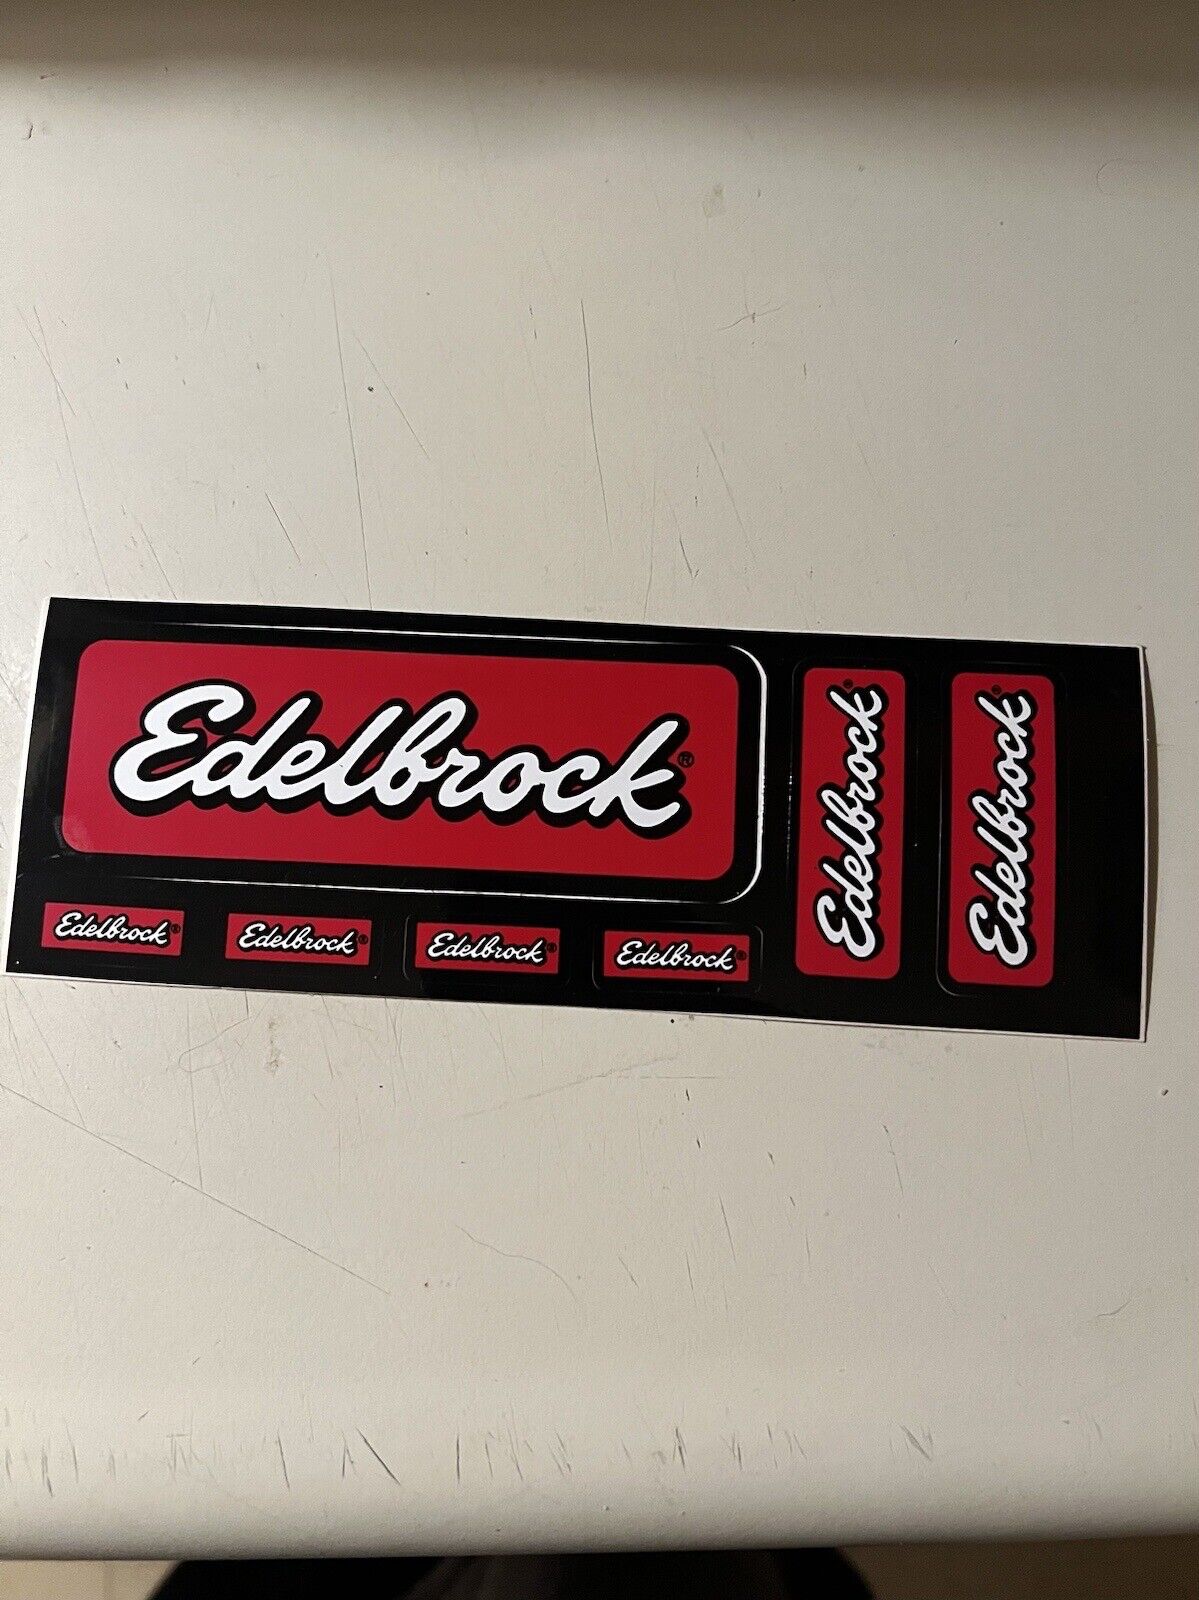 EDELBROCK Manifolds - Original Vintage Racing Decal/Sticker Sheet